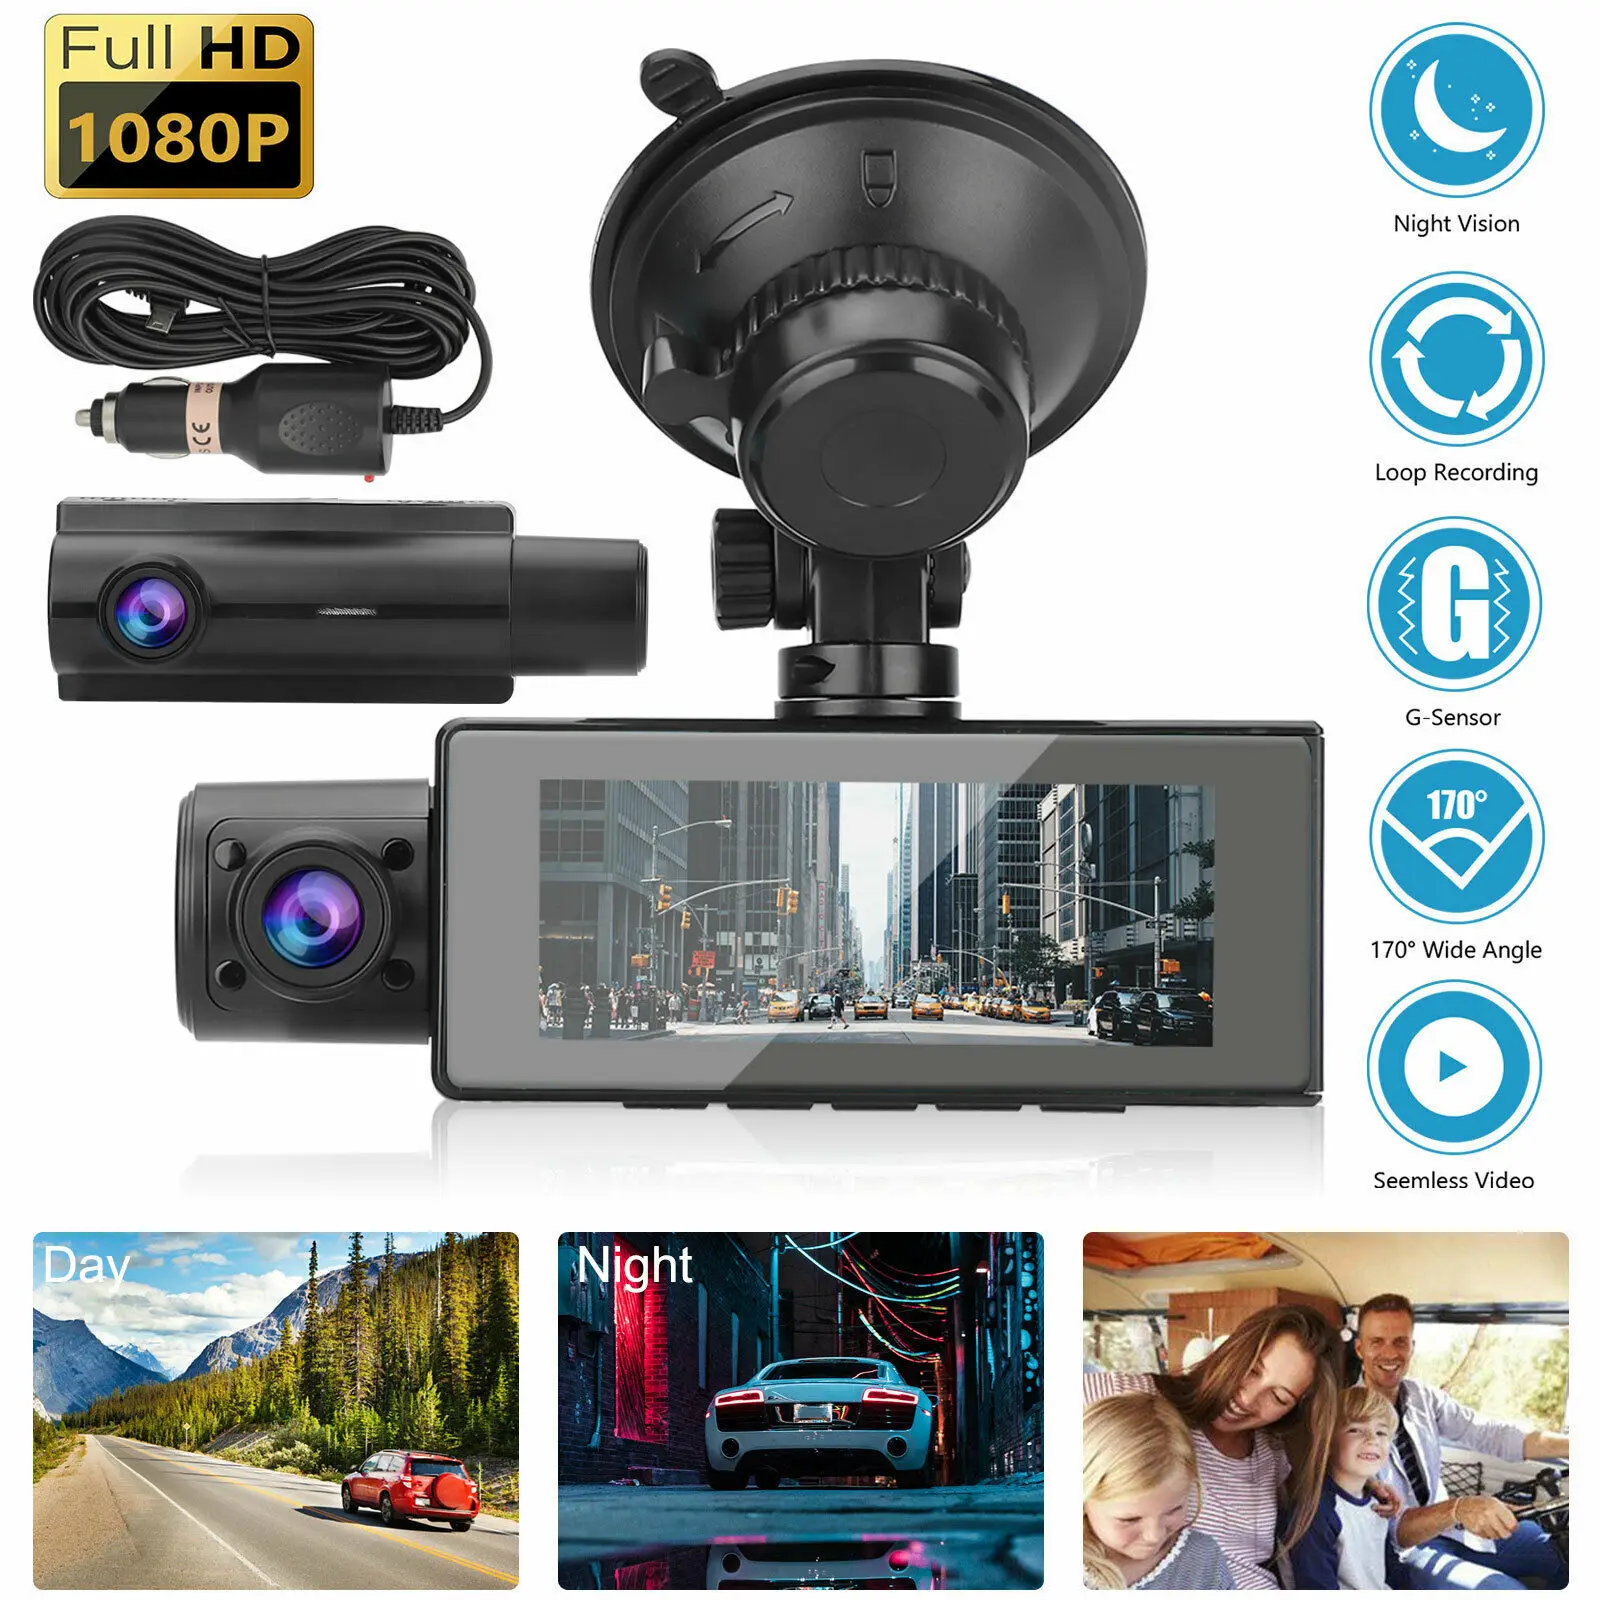 Car DVR Full HD 1080P Dash Cam Front+Inside+Rear Cameras Rear View Auto Video Recorder Parking Monitor Night Vision G-sensor GPS